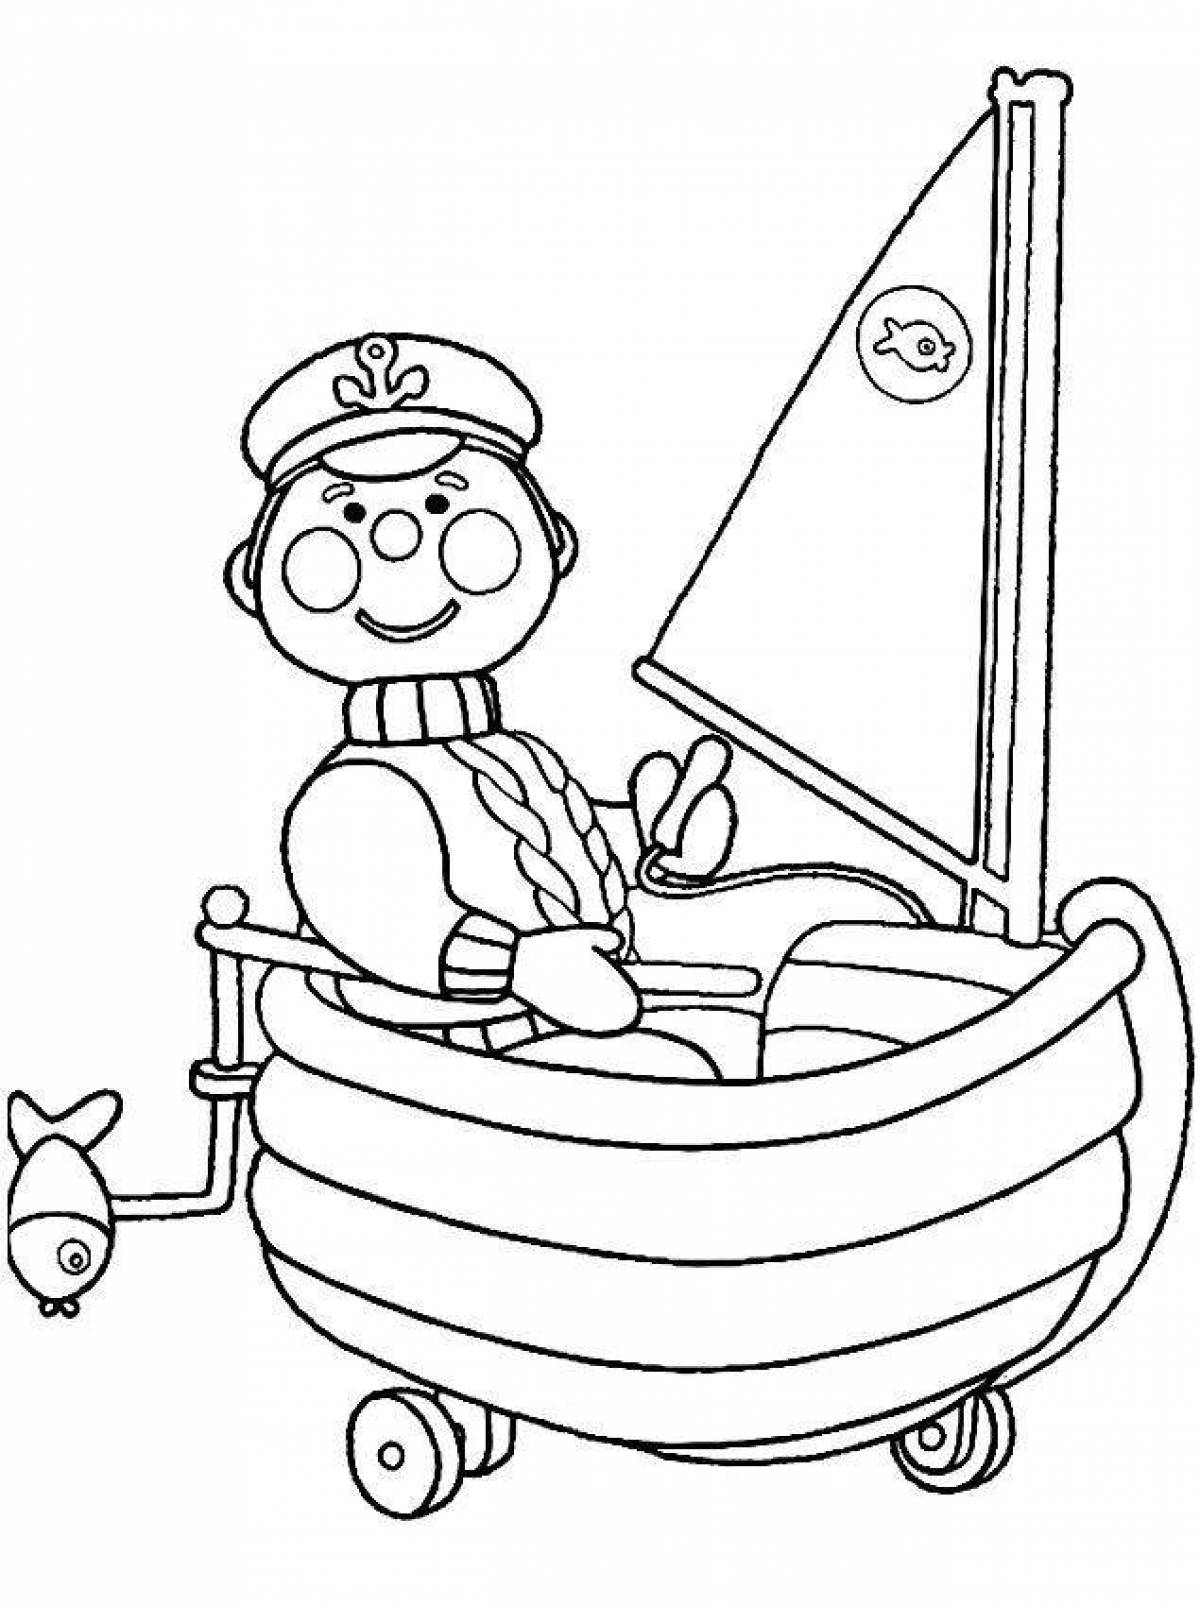 Colorful-sailor-venture sailor coloring book for kids